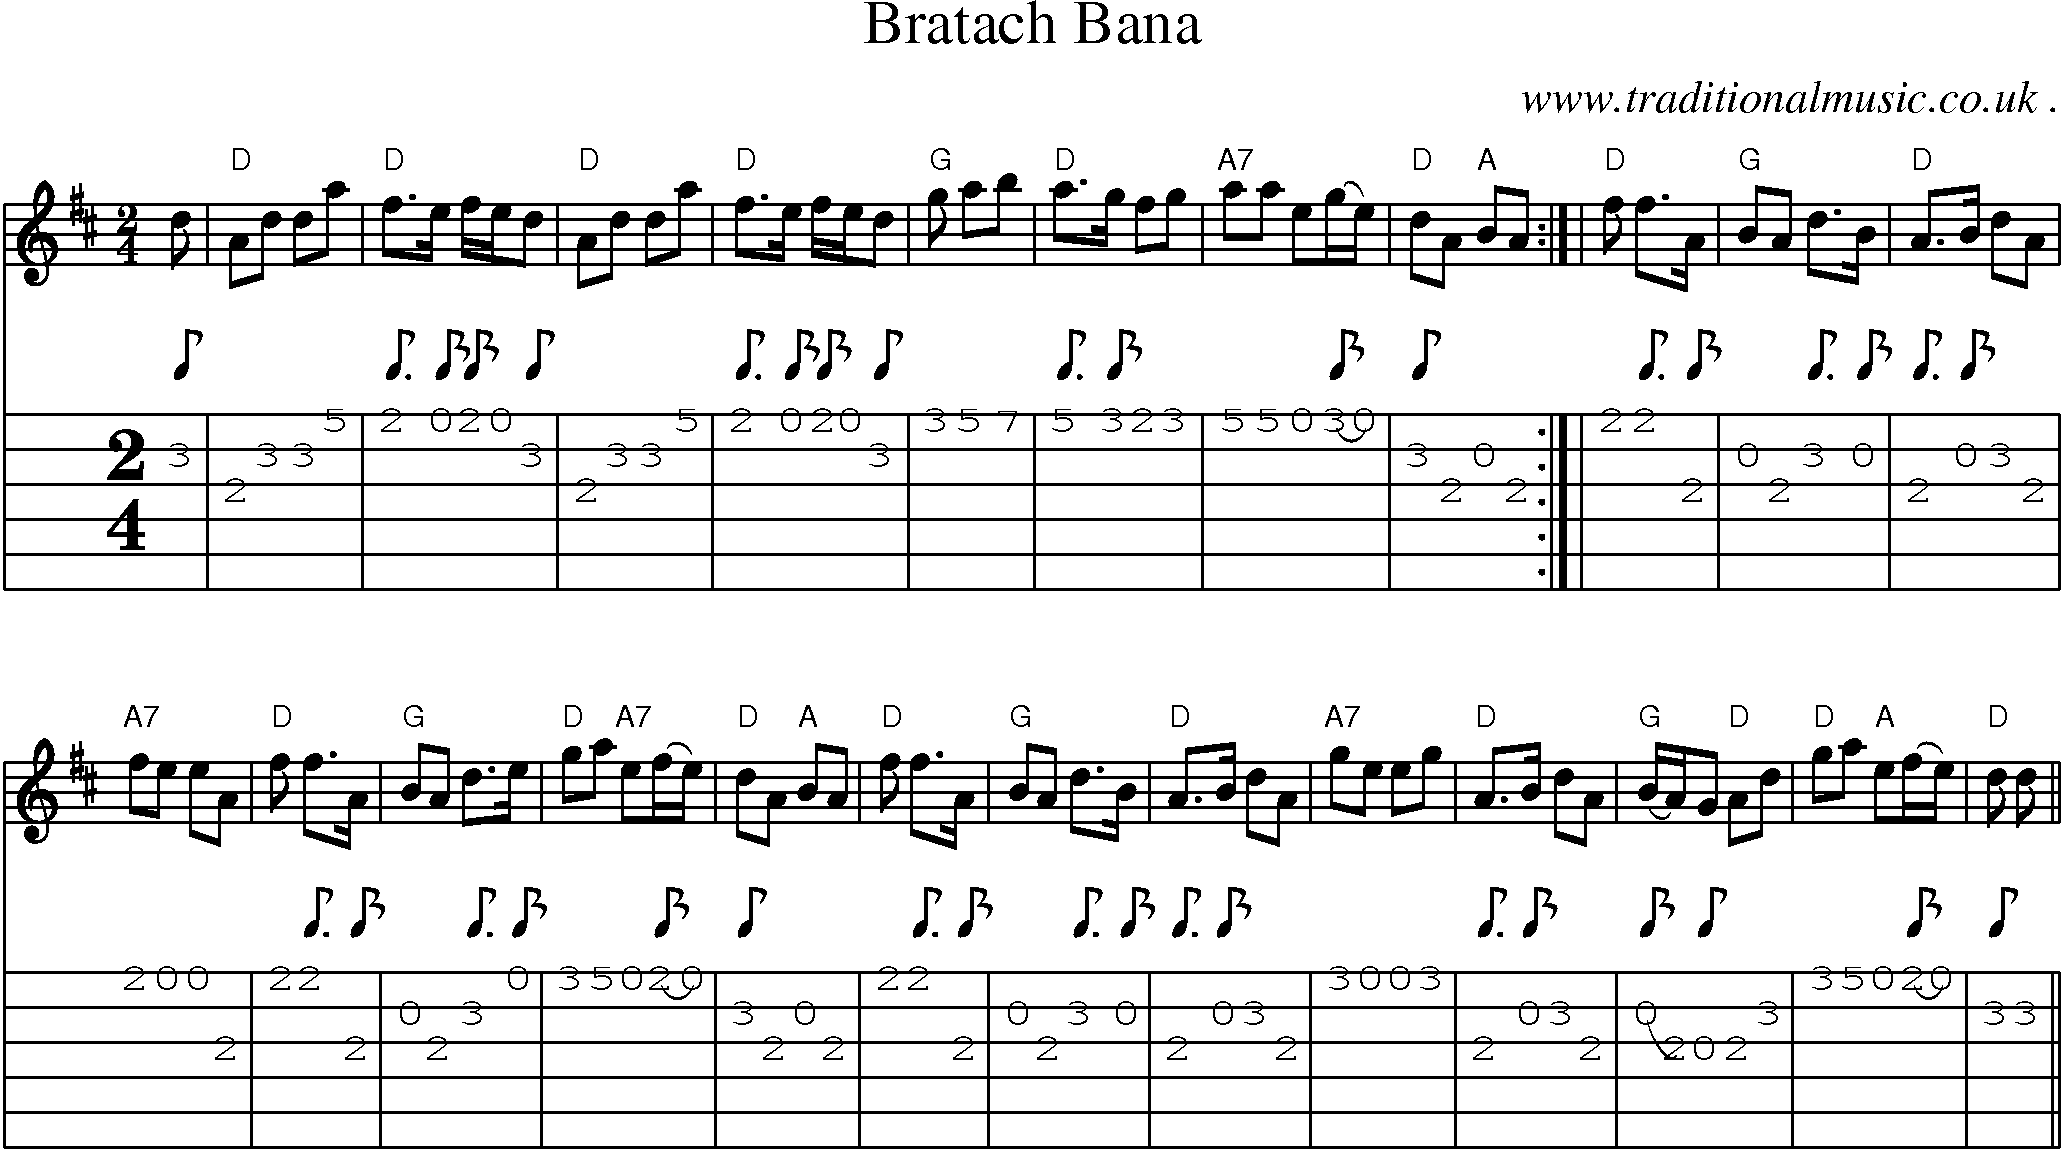 Sheet-music  score, Chords and Guitar Tabs for Bratach Bana